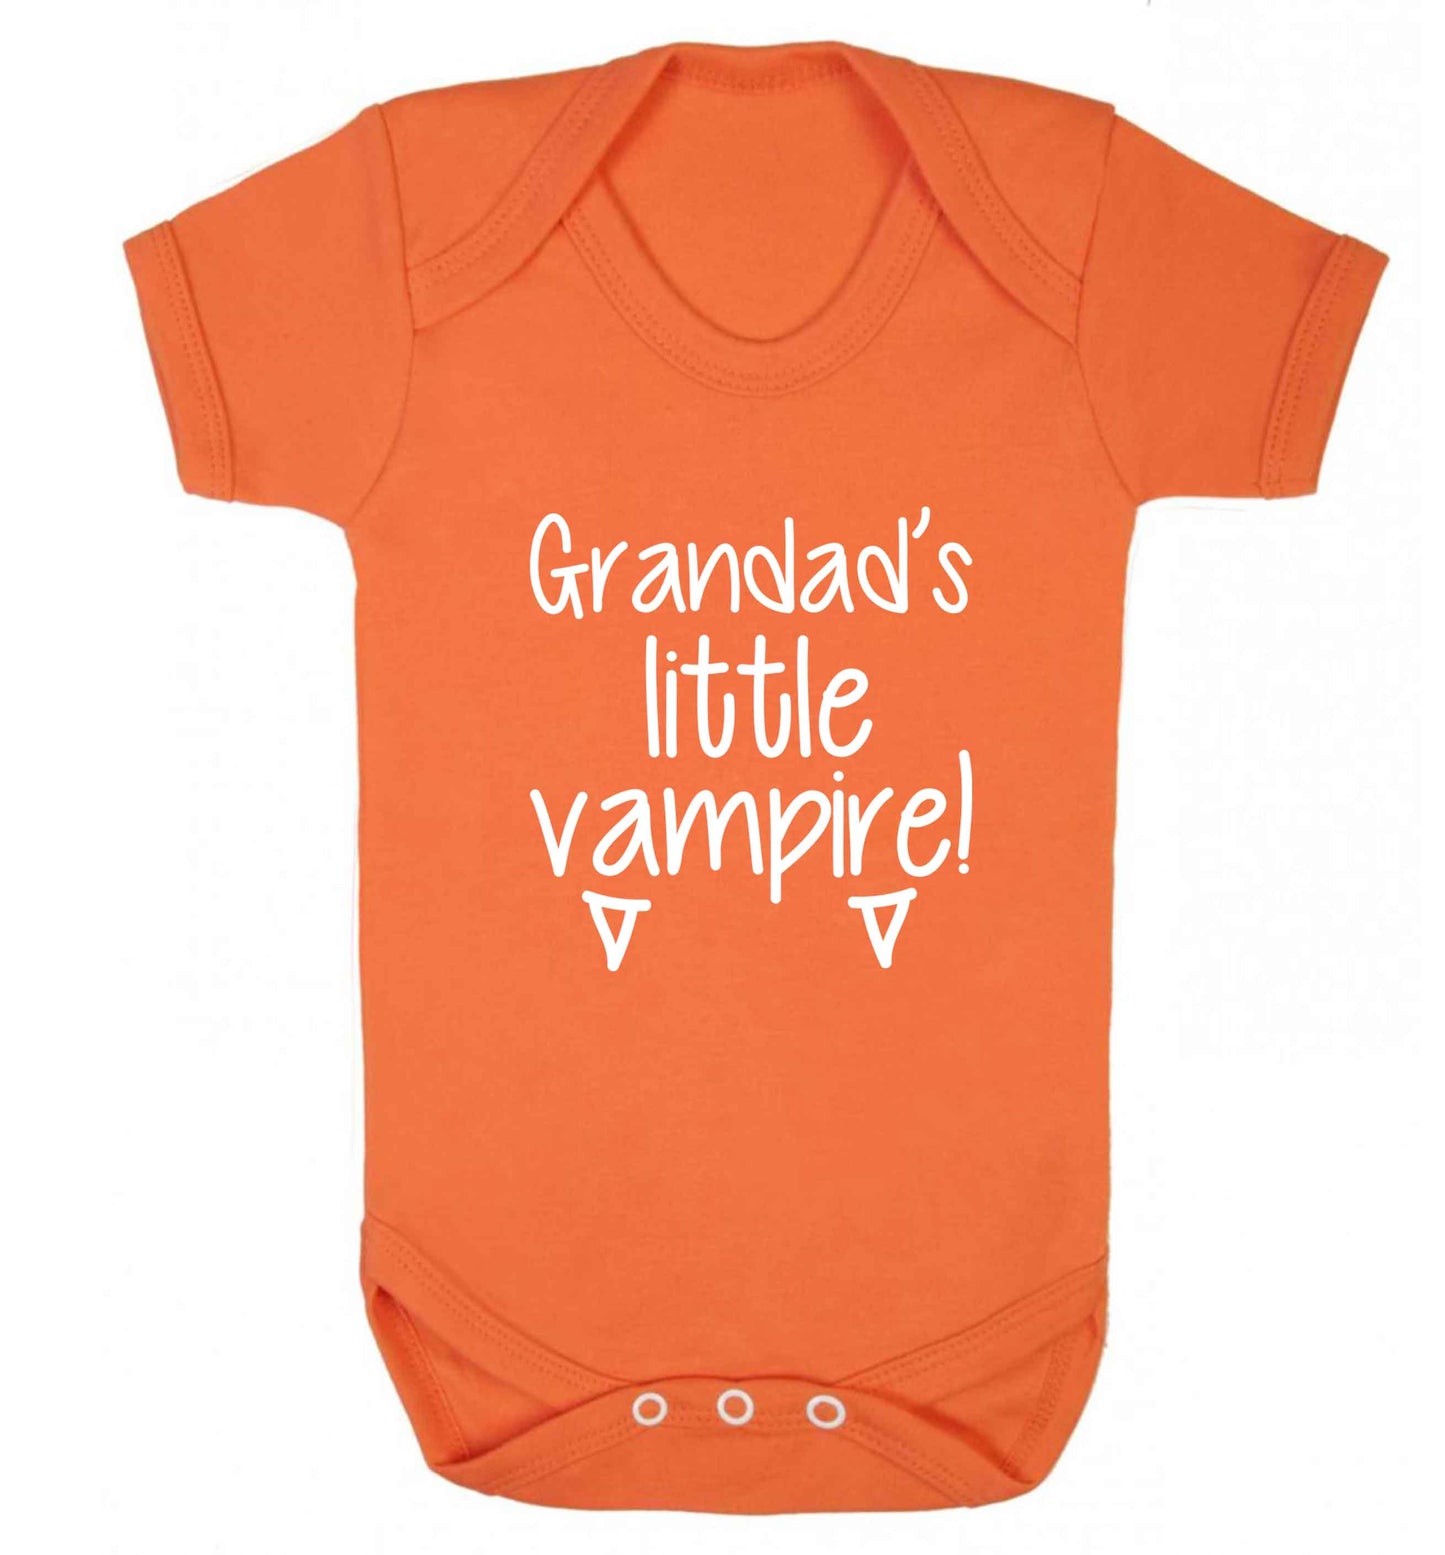 Grandad's little vampire baby vest orange 18-24 months